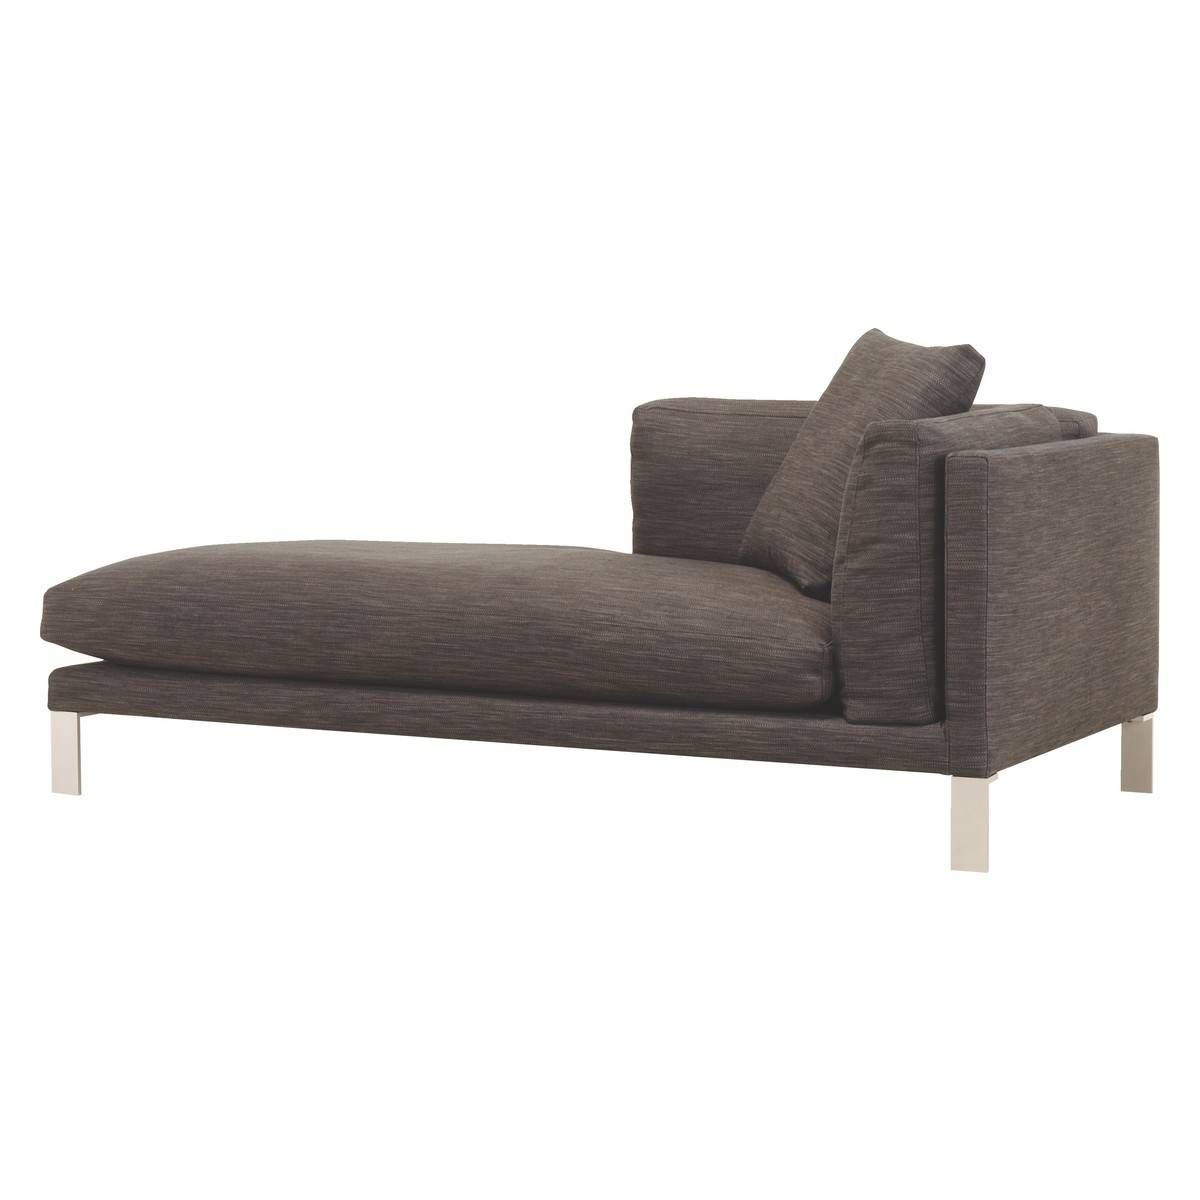 Small Modular Sofa With Design Ideas 32257 | Kengire Throughout Small Modular Sofas (View 25 of 25)